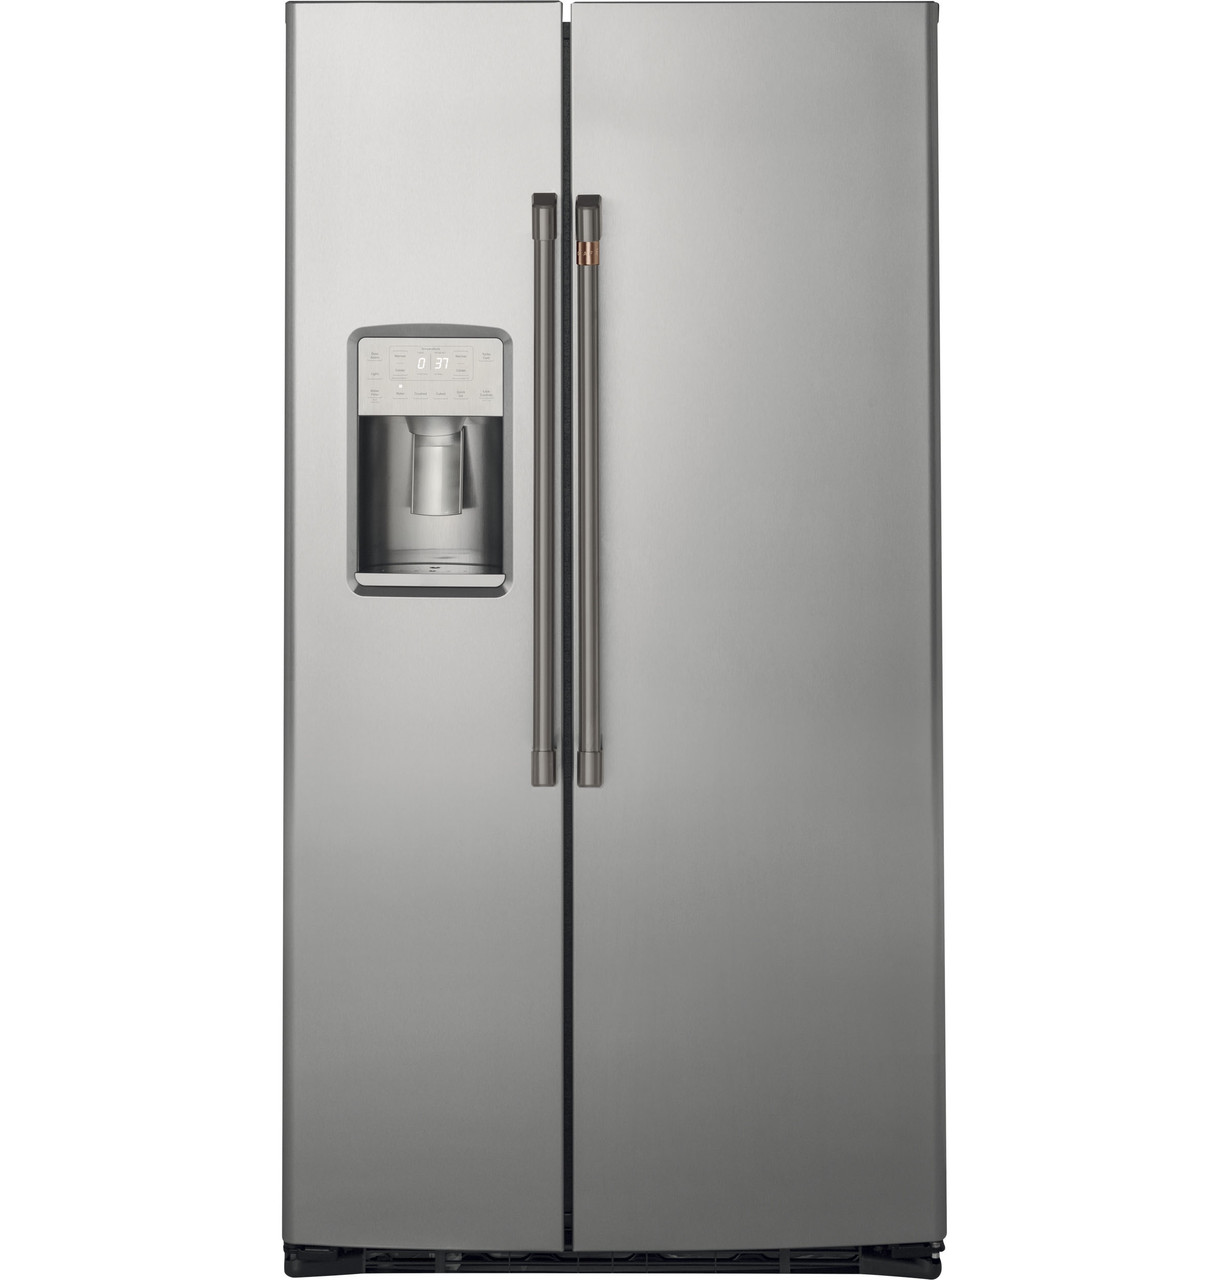 LG 22 Cu ft. Smart Counter Depth Silver-Tone Double Freezer Refrigerator